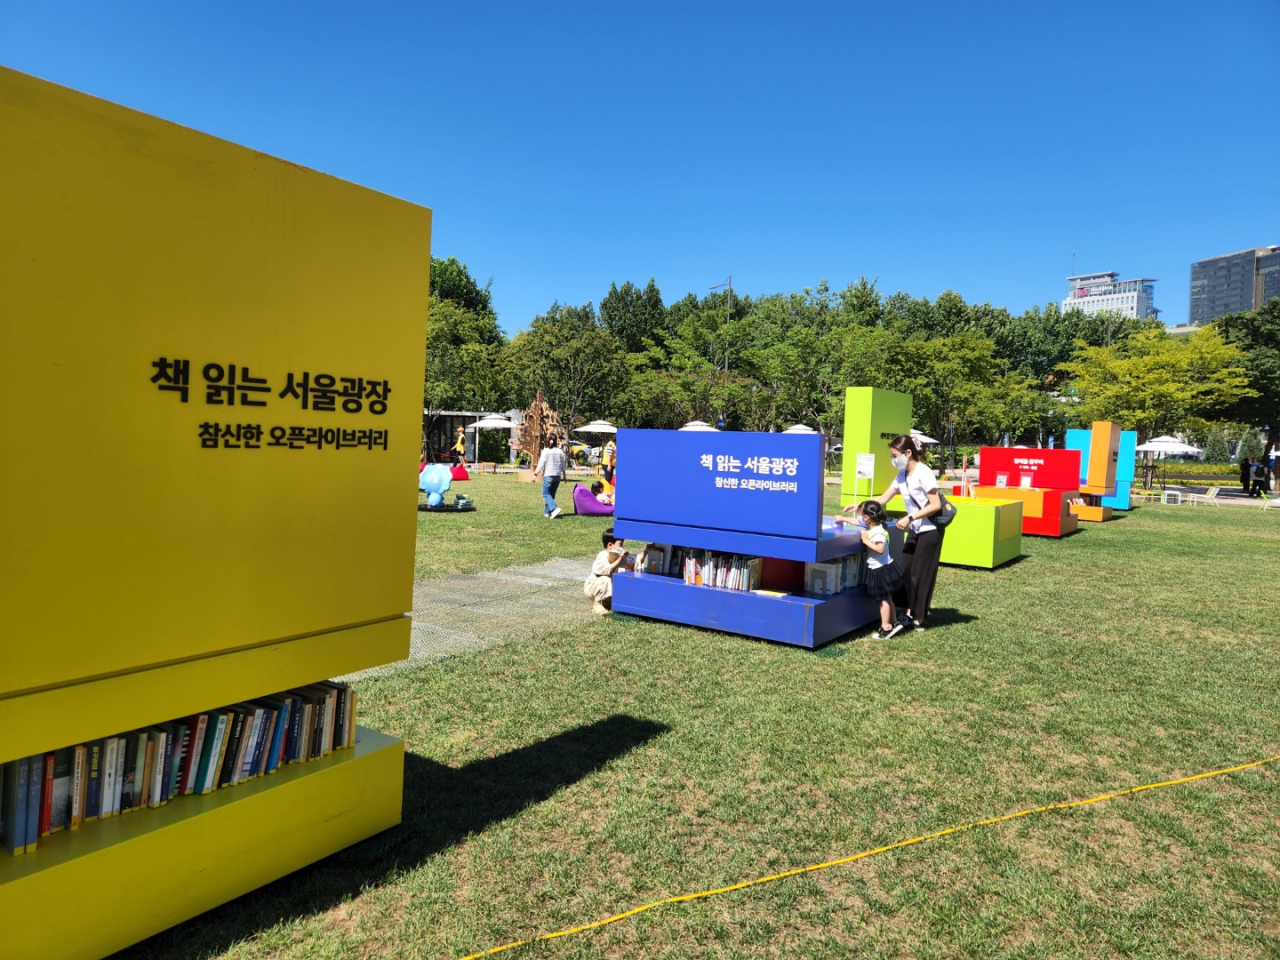 Visitors browse through books on display. (Choi Jae-hee / The Korea Herald)